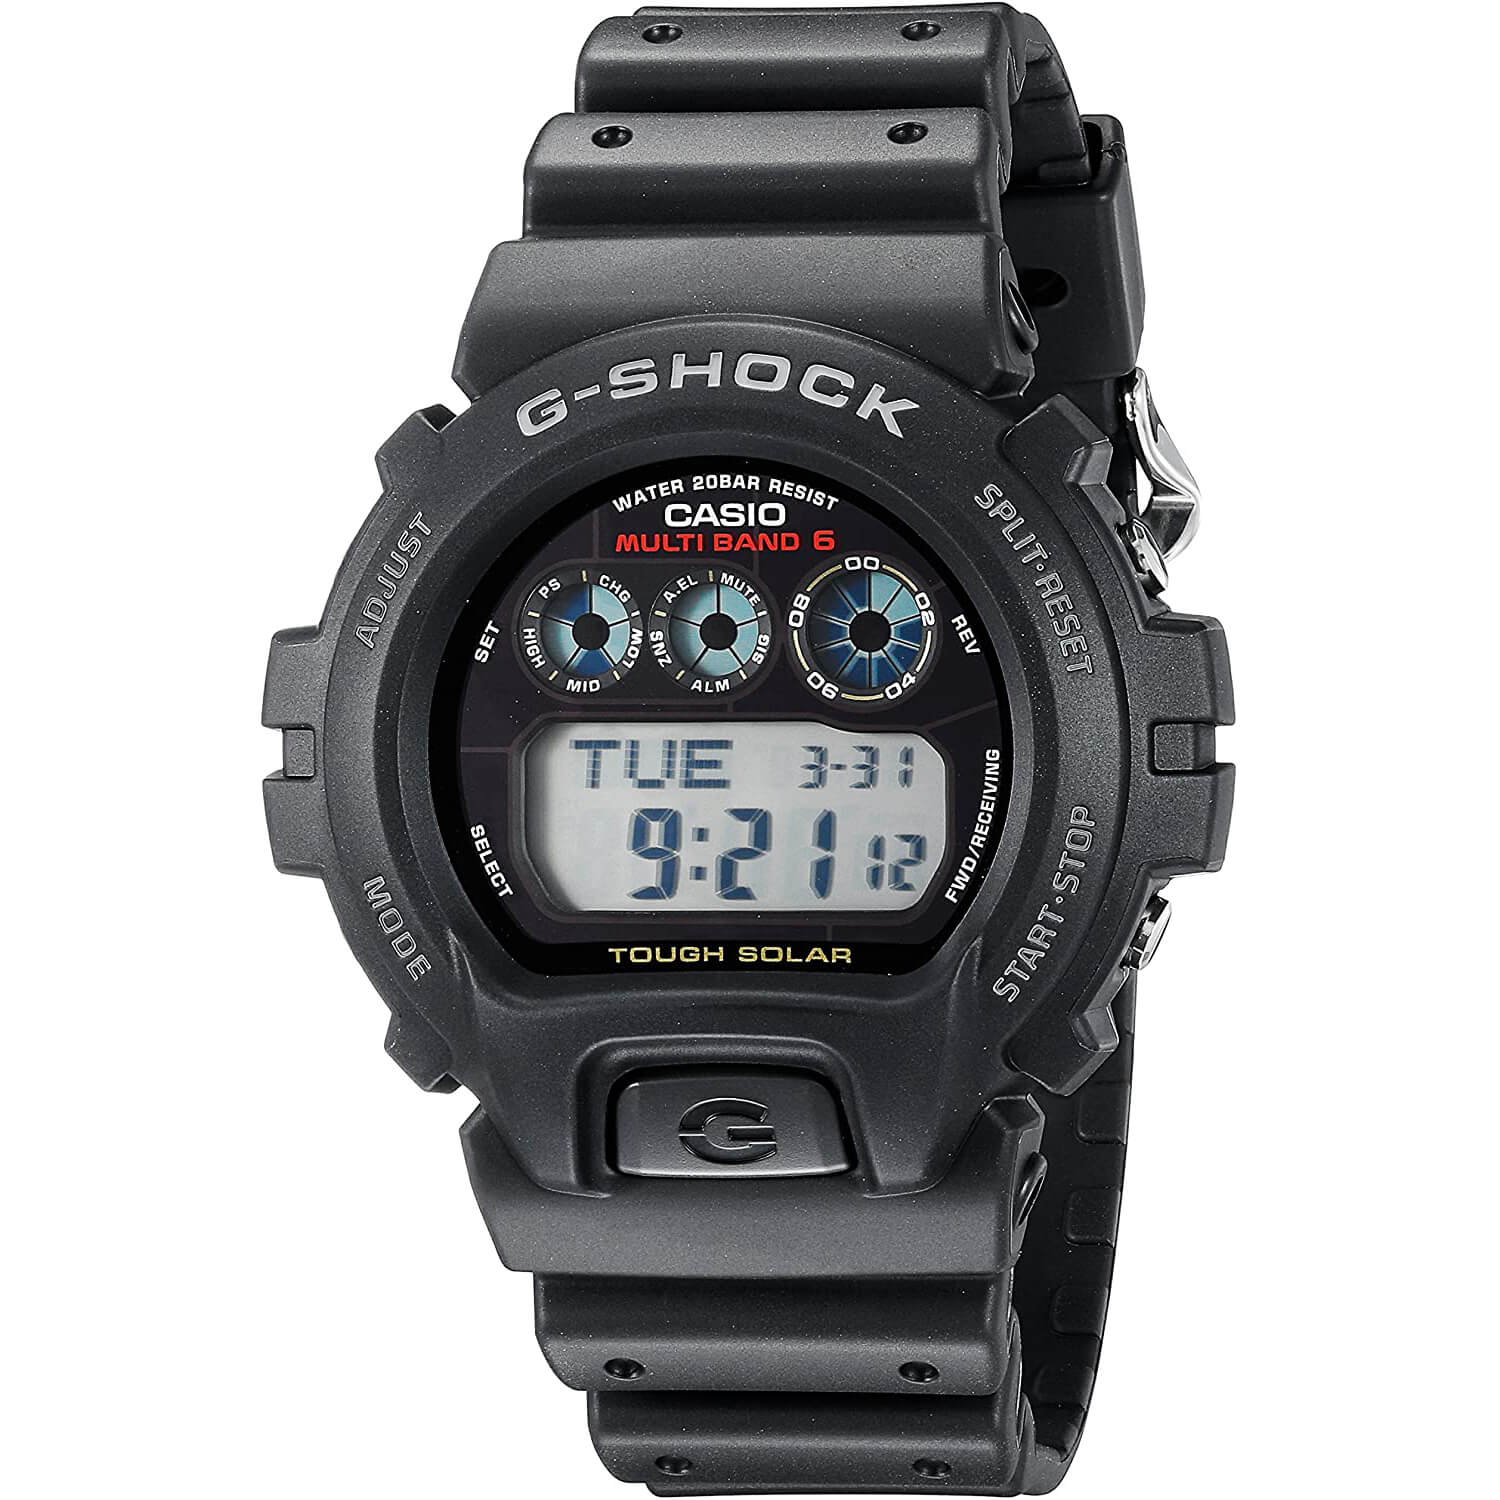 Casio Men’s G-Shock GW6900-1 Solar Watch